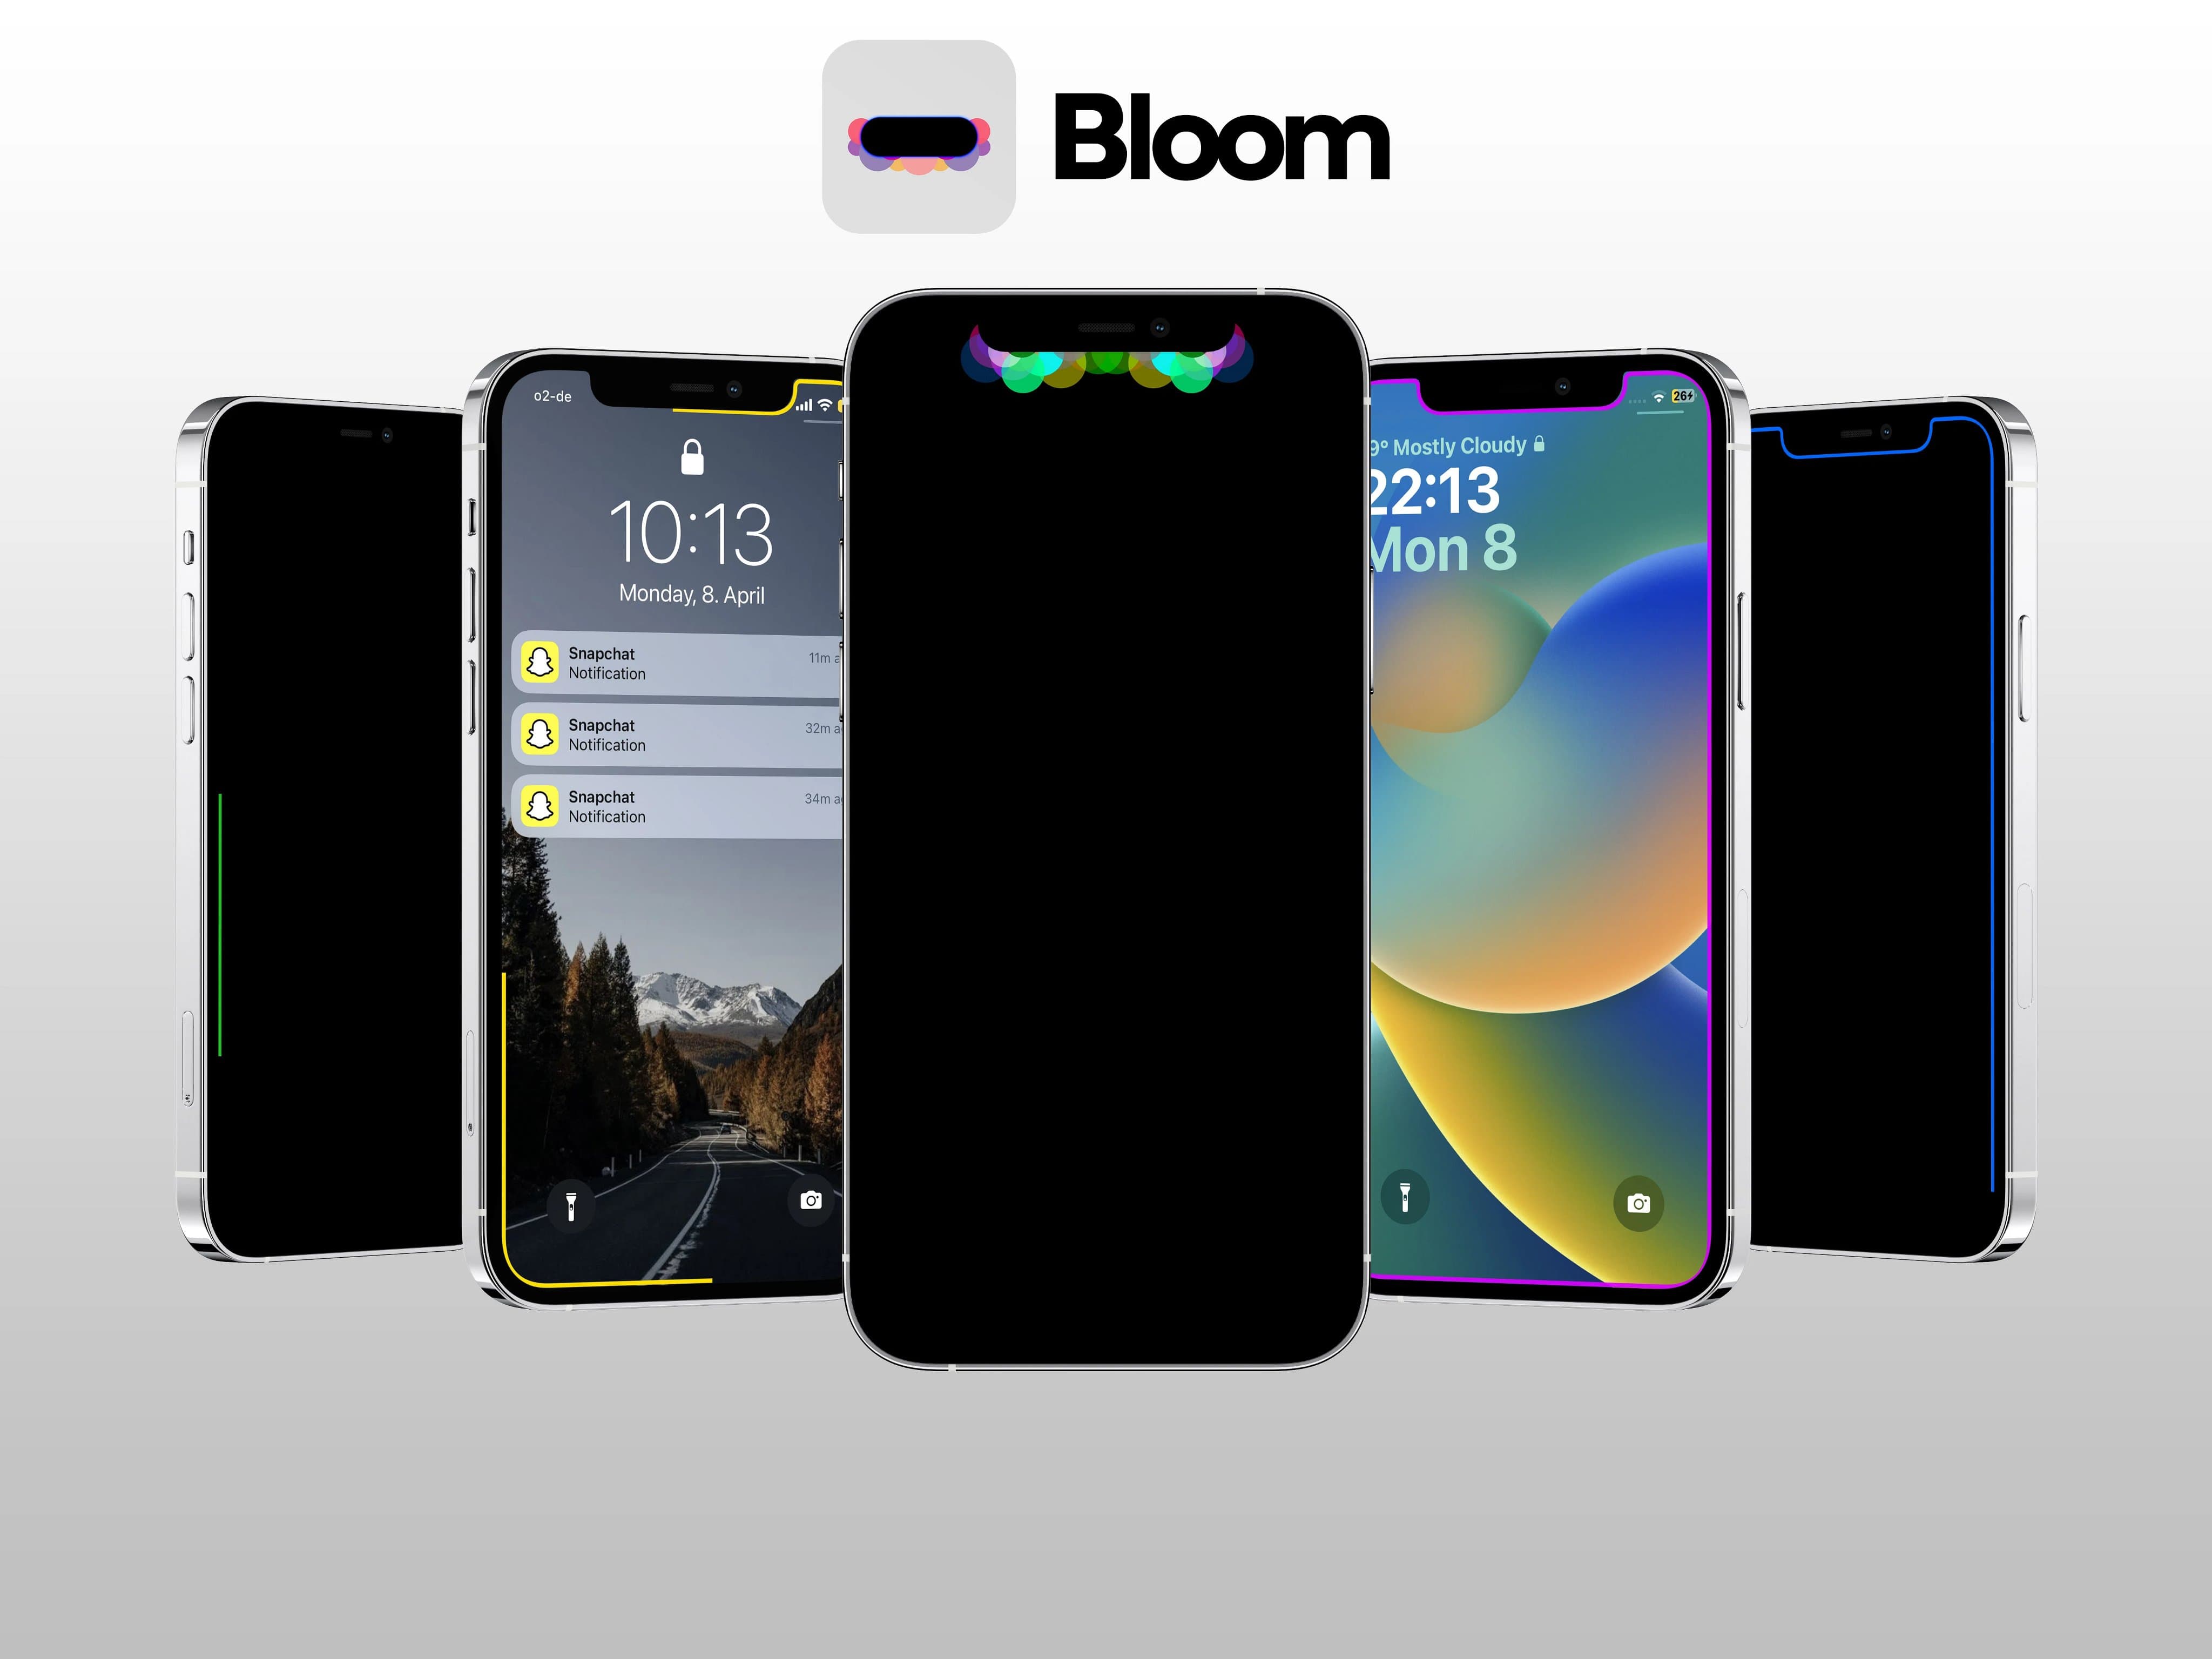 Animate your iPhone’s mundane notifications with the new Bloom jailbreak tweak